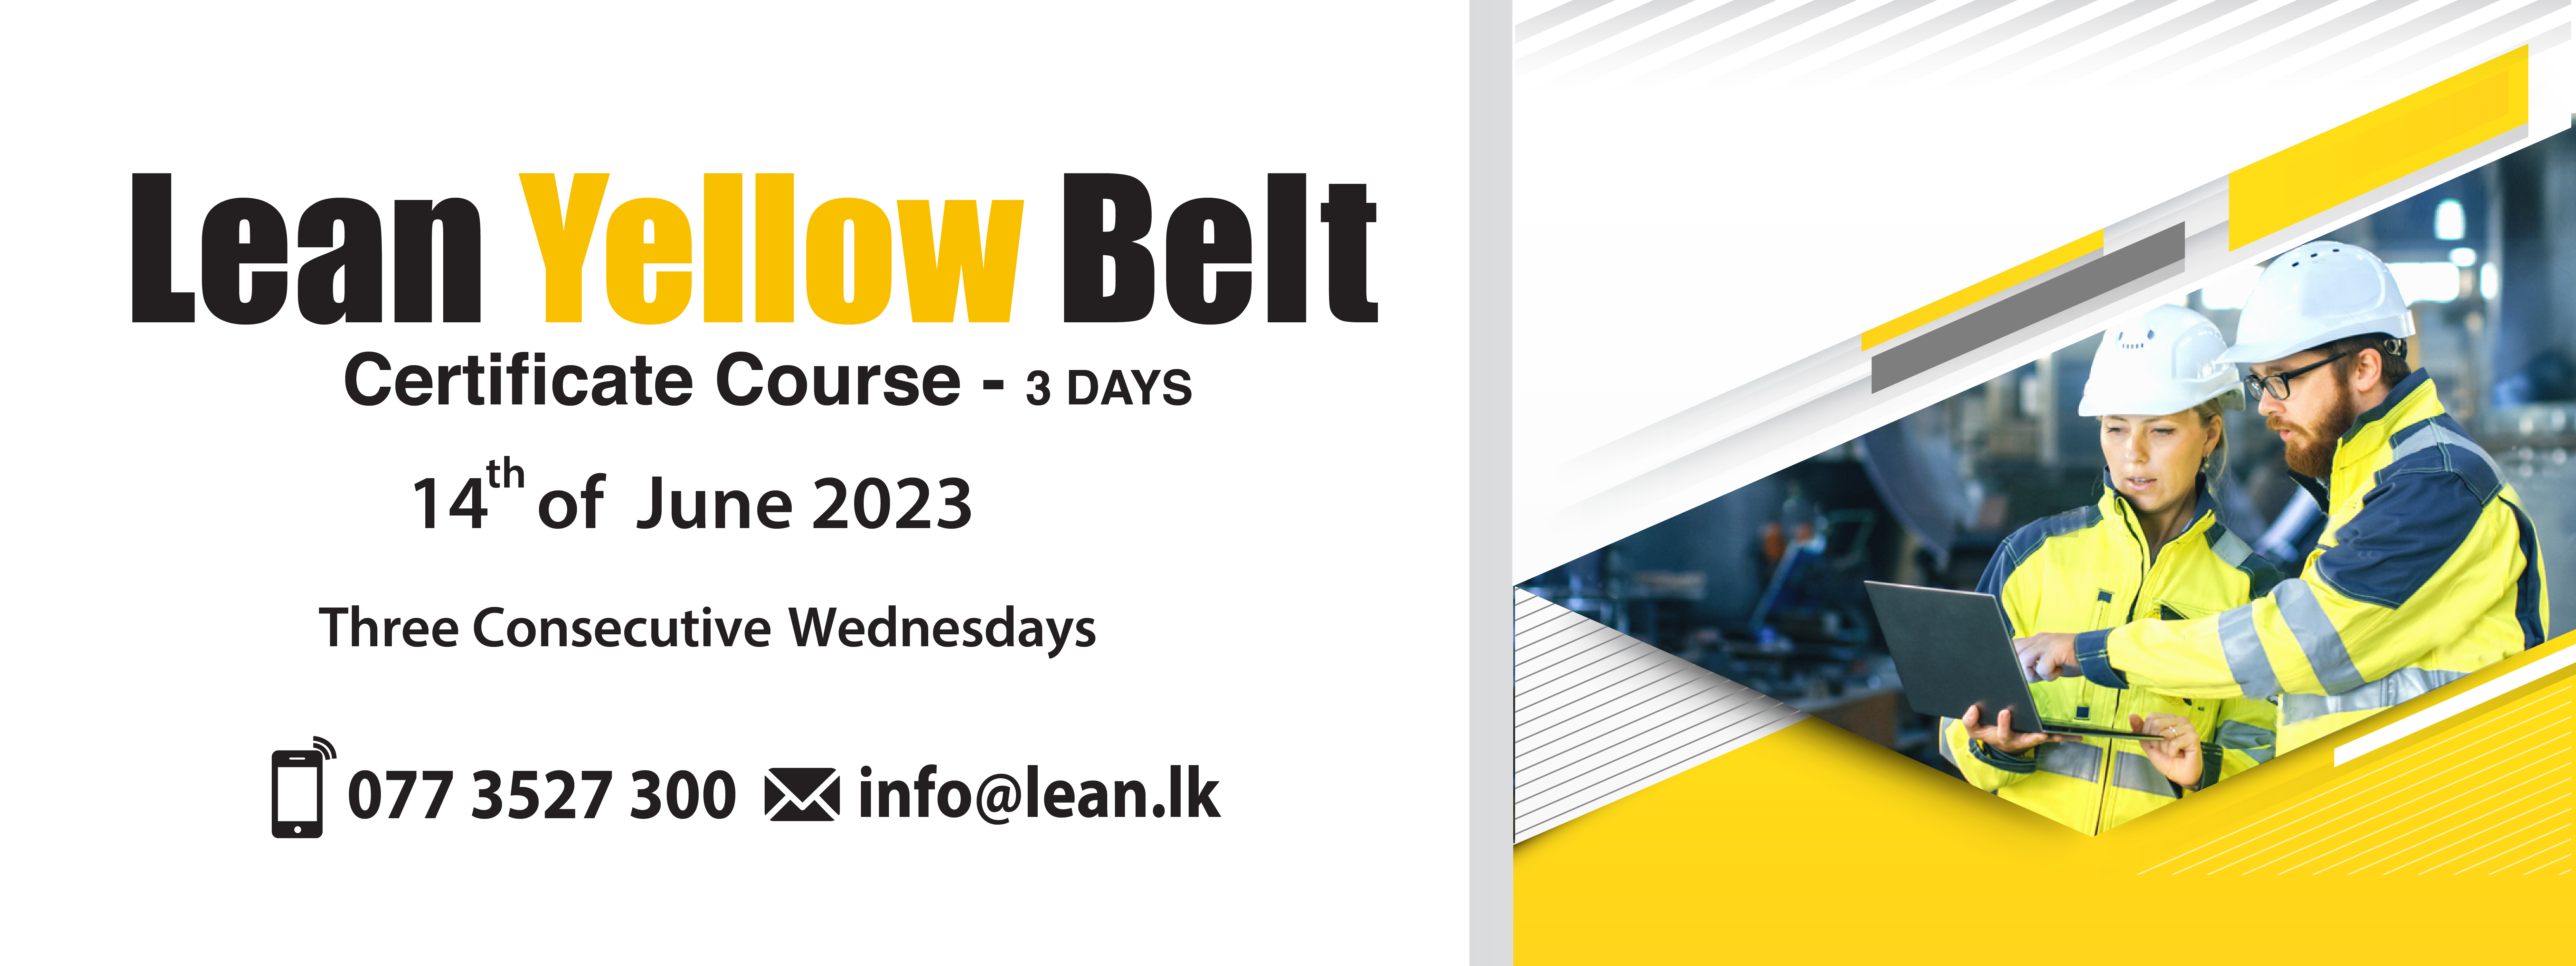 Lean Yellow Belt Certificate Course